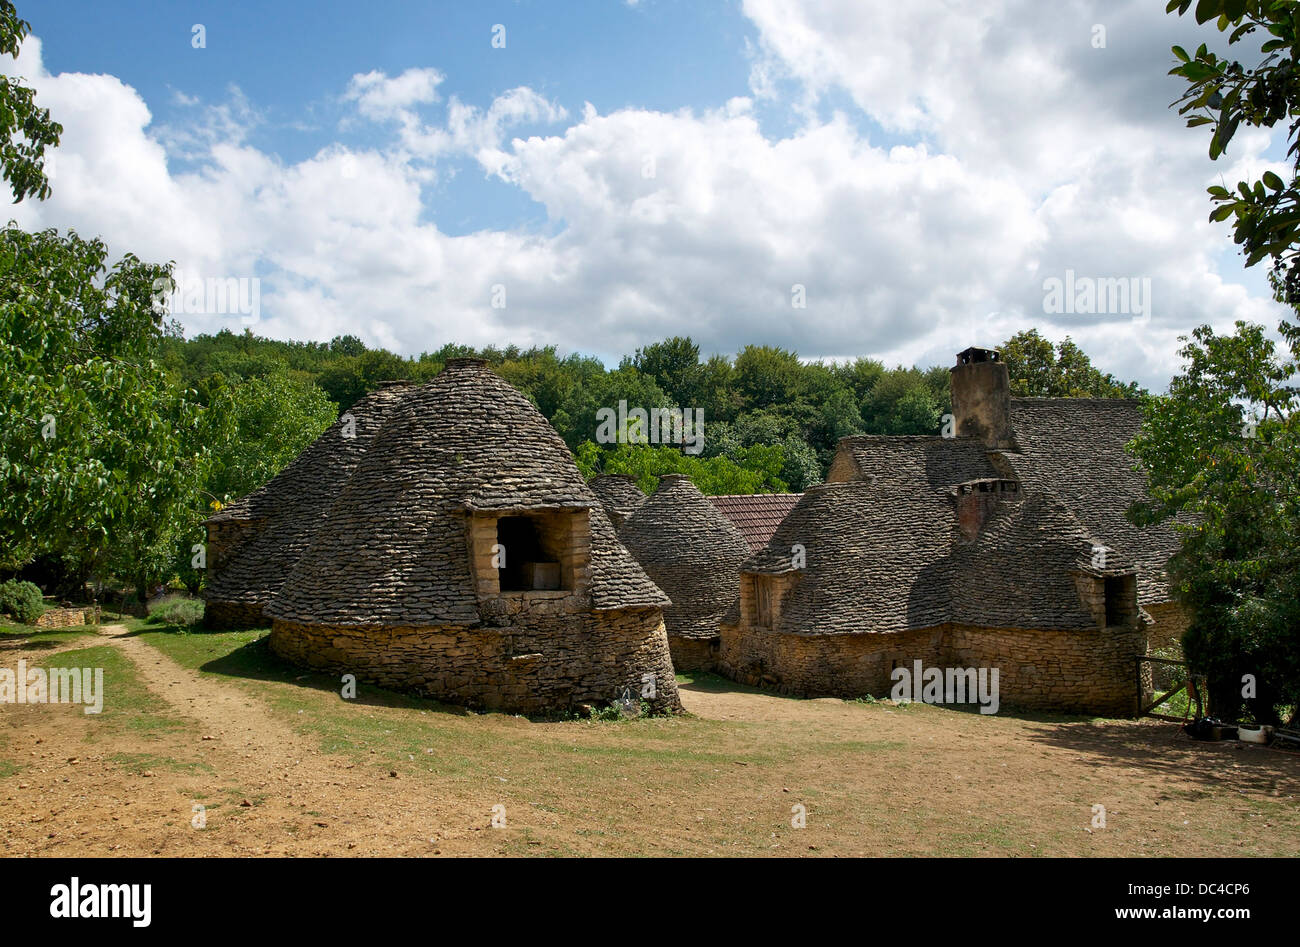 The village of the 'Cabanes du Breuil' in Saint-André d'Allas, Dordogne, France. Stock Photo